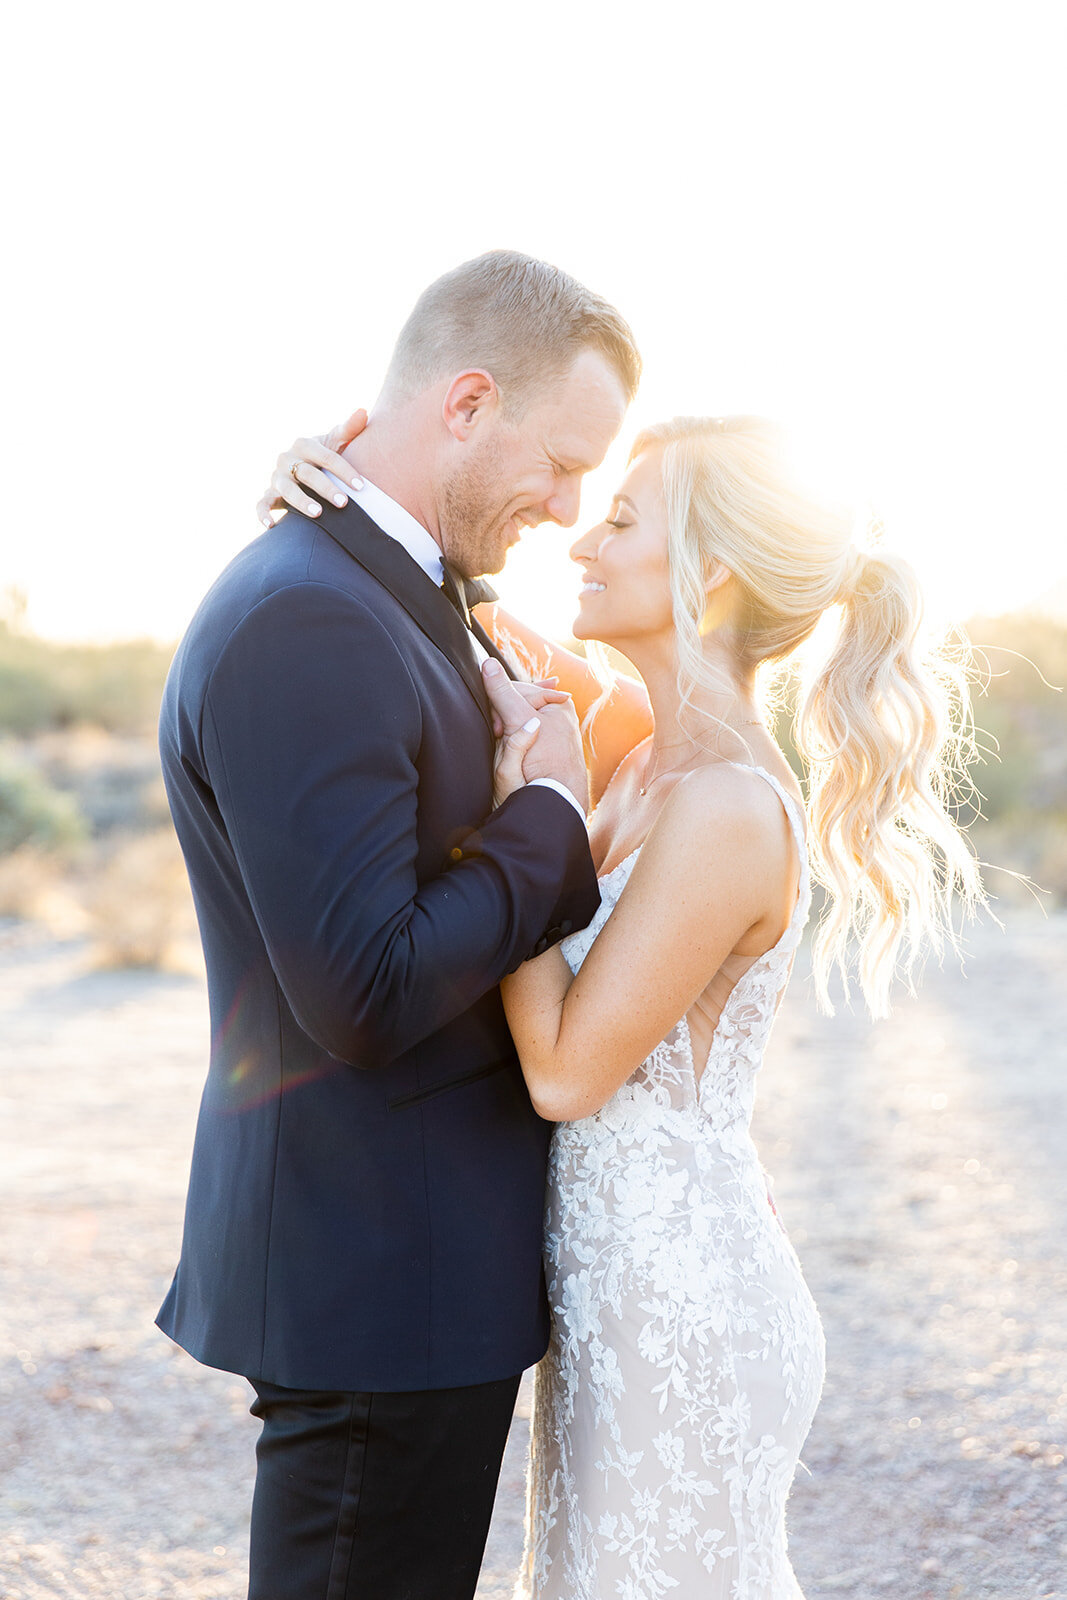 Karlie Colleen Photography - Ashley & Grant Wedding - The Paseo - Phoenix Arizona-813